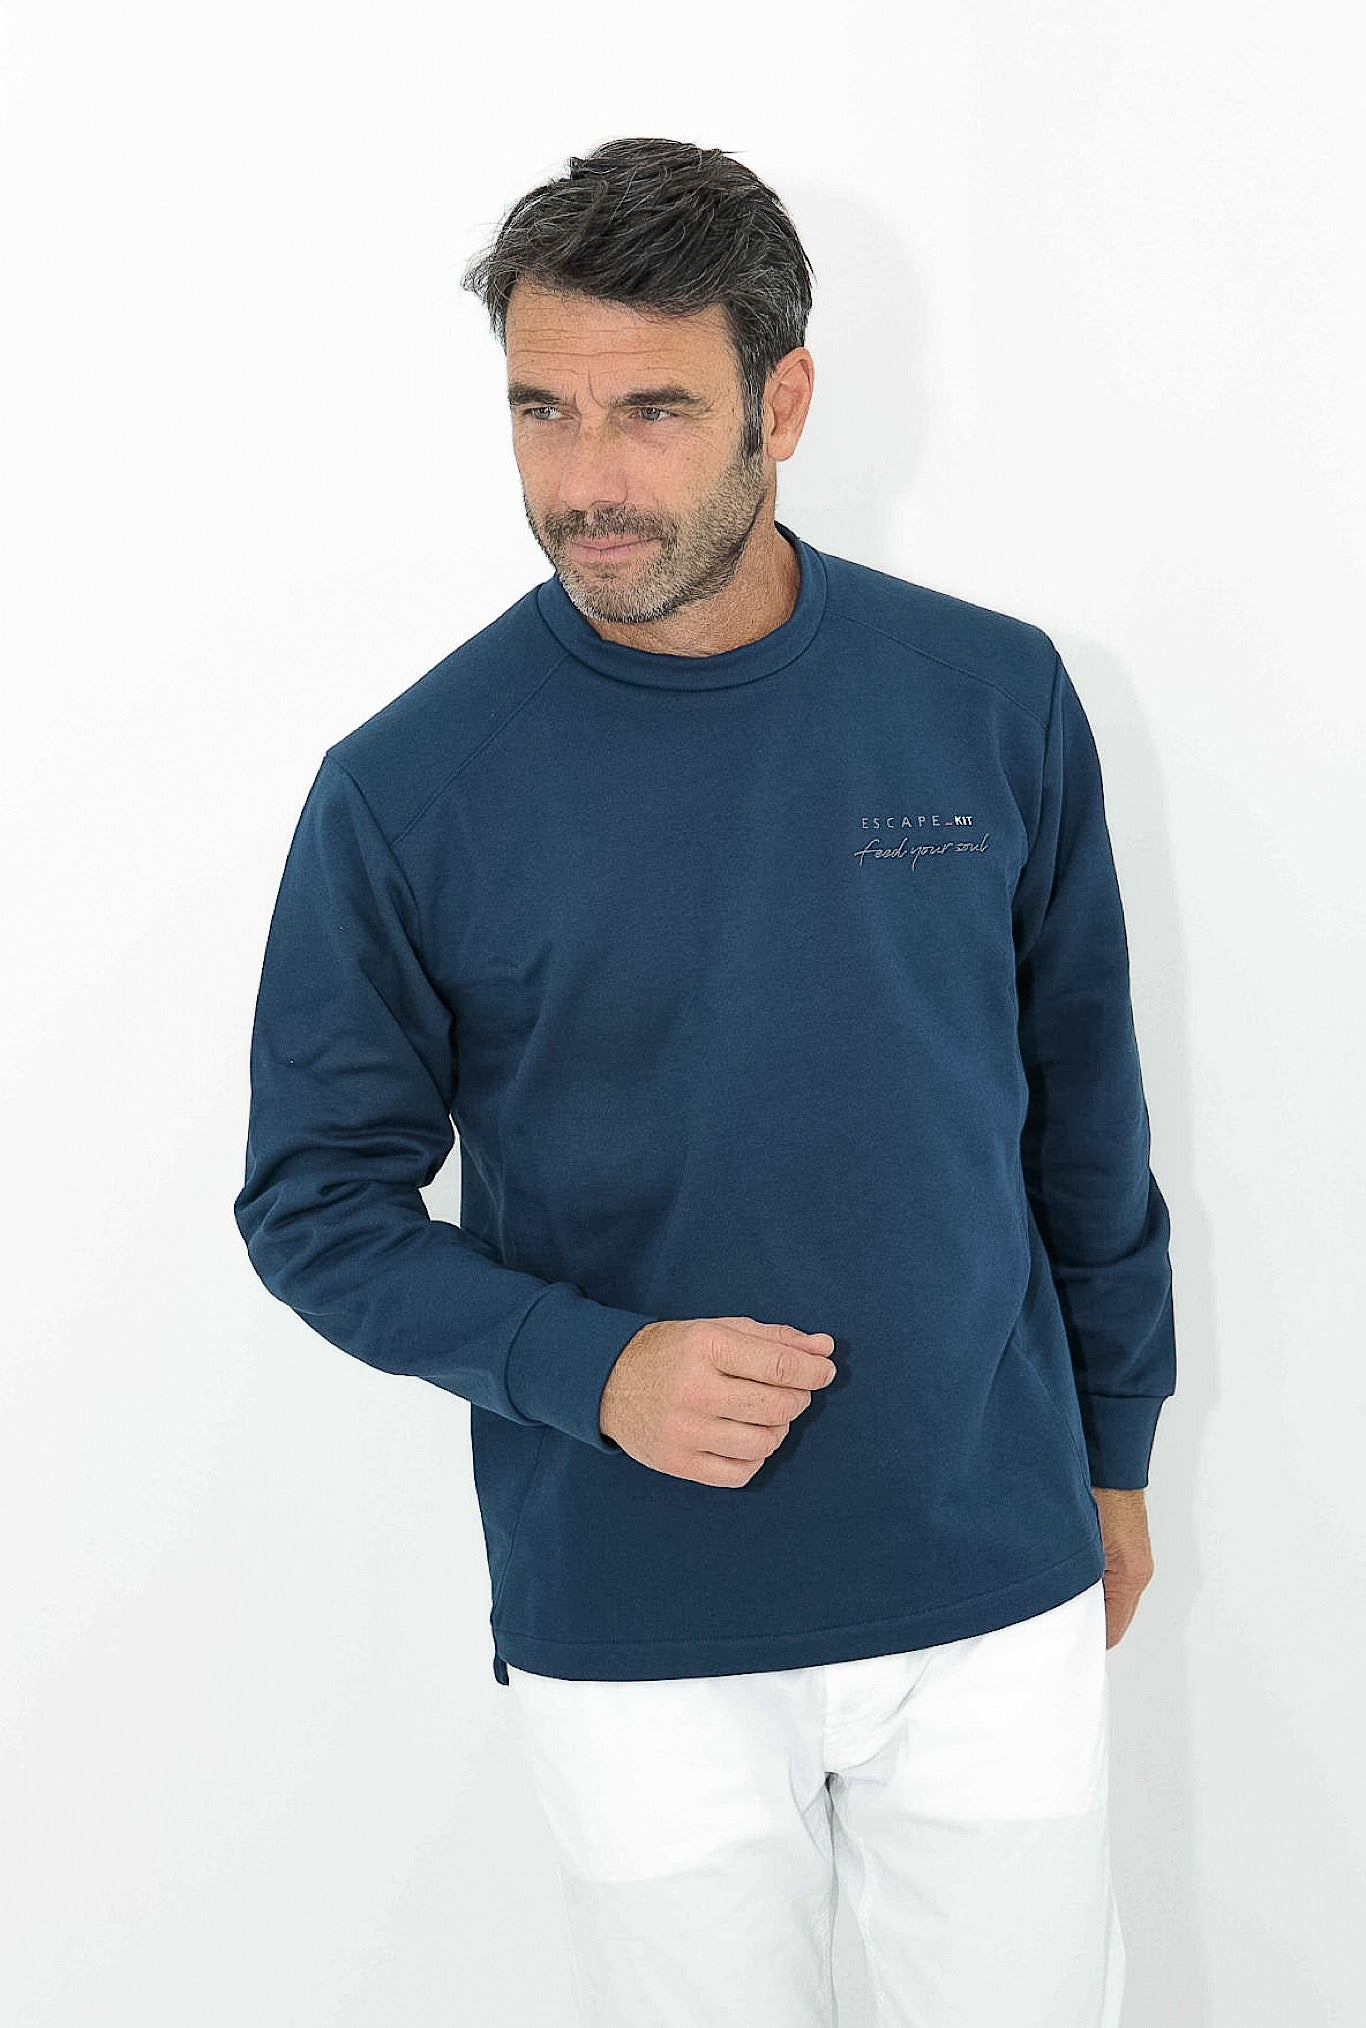 SEASE Blue Crew Neck Sweatshirt